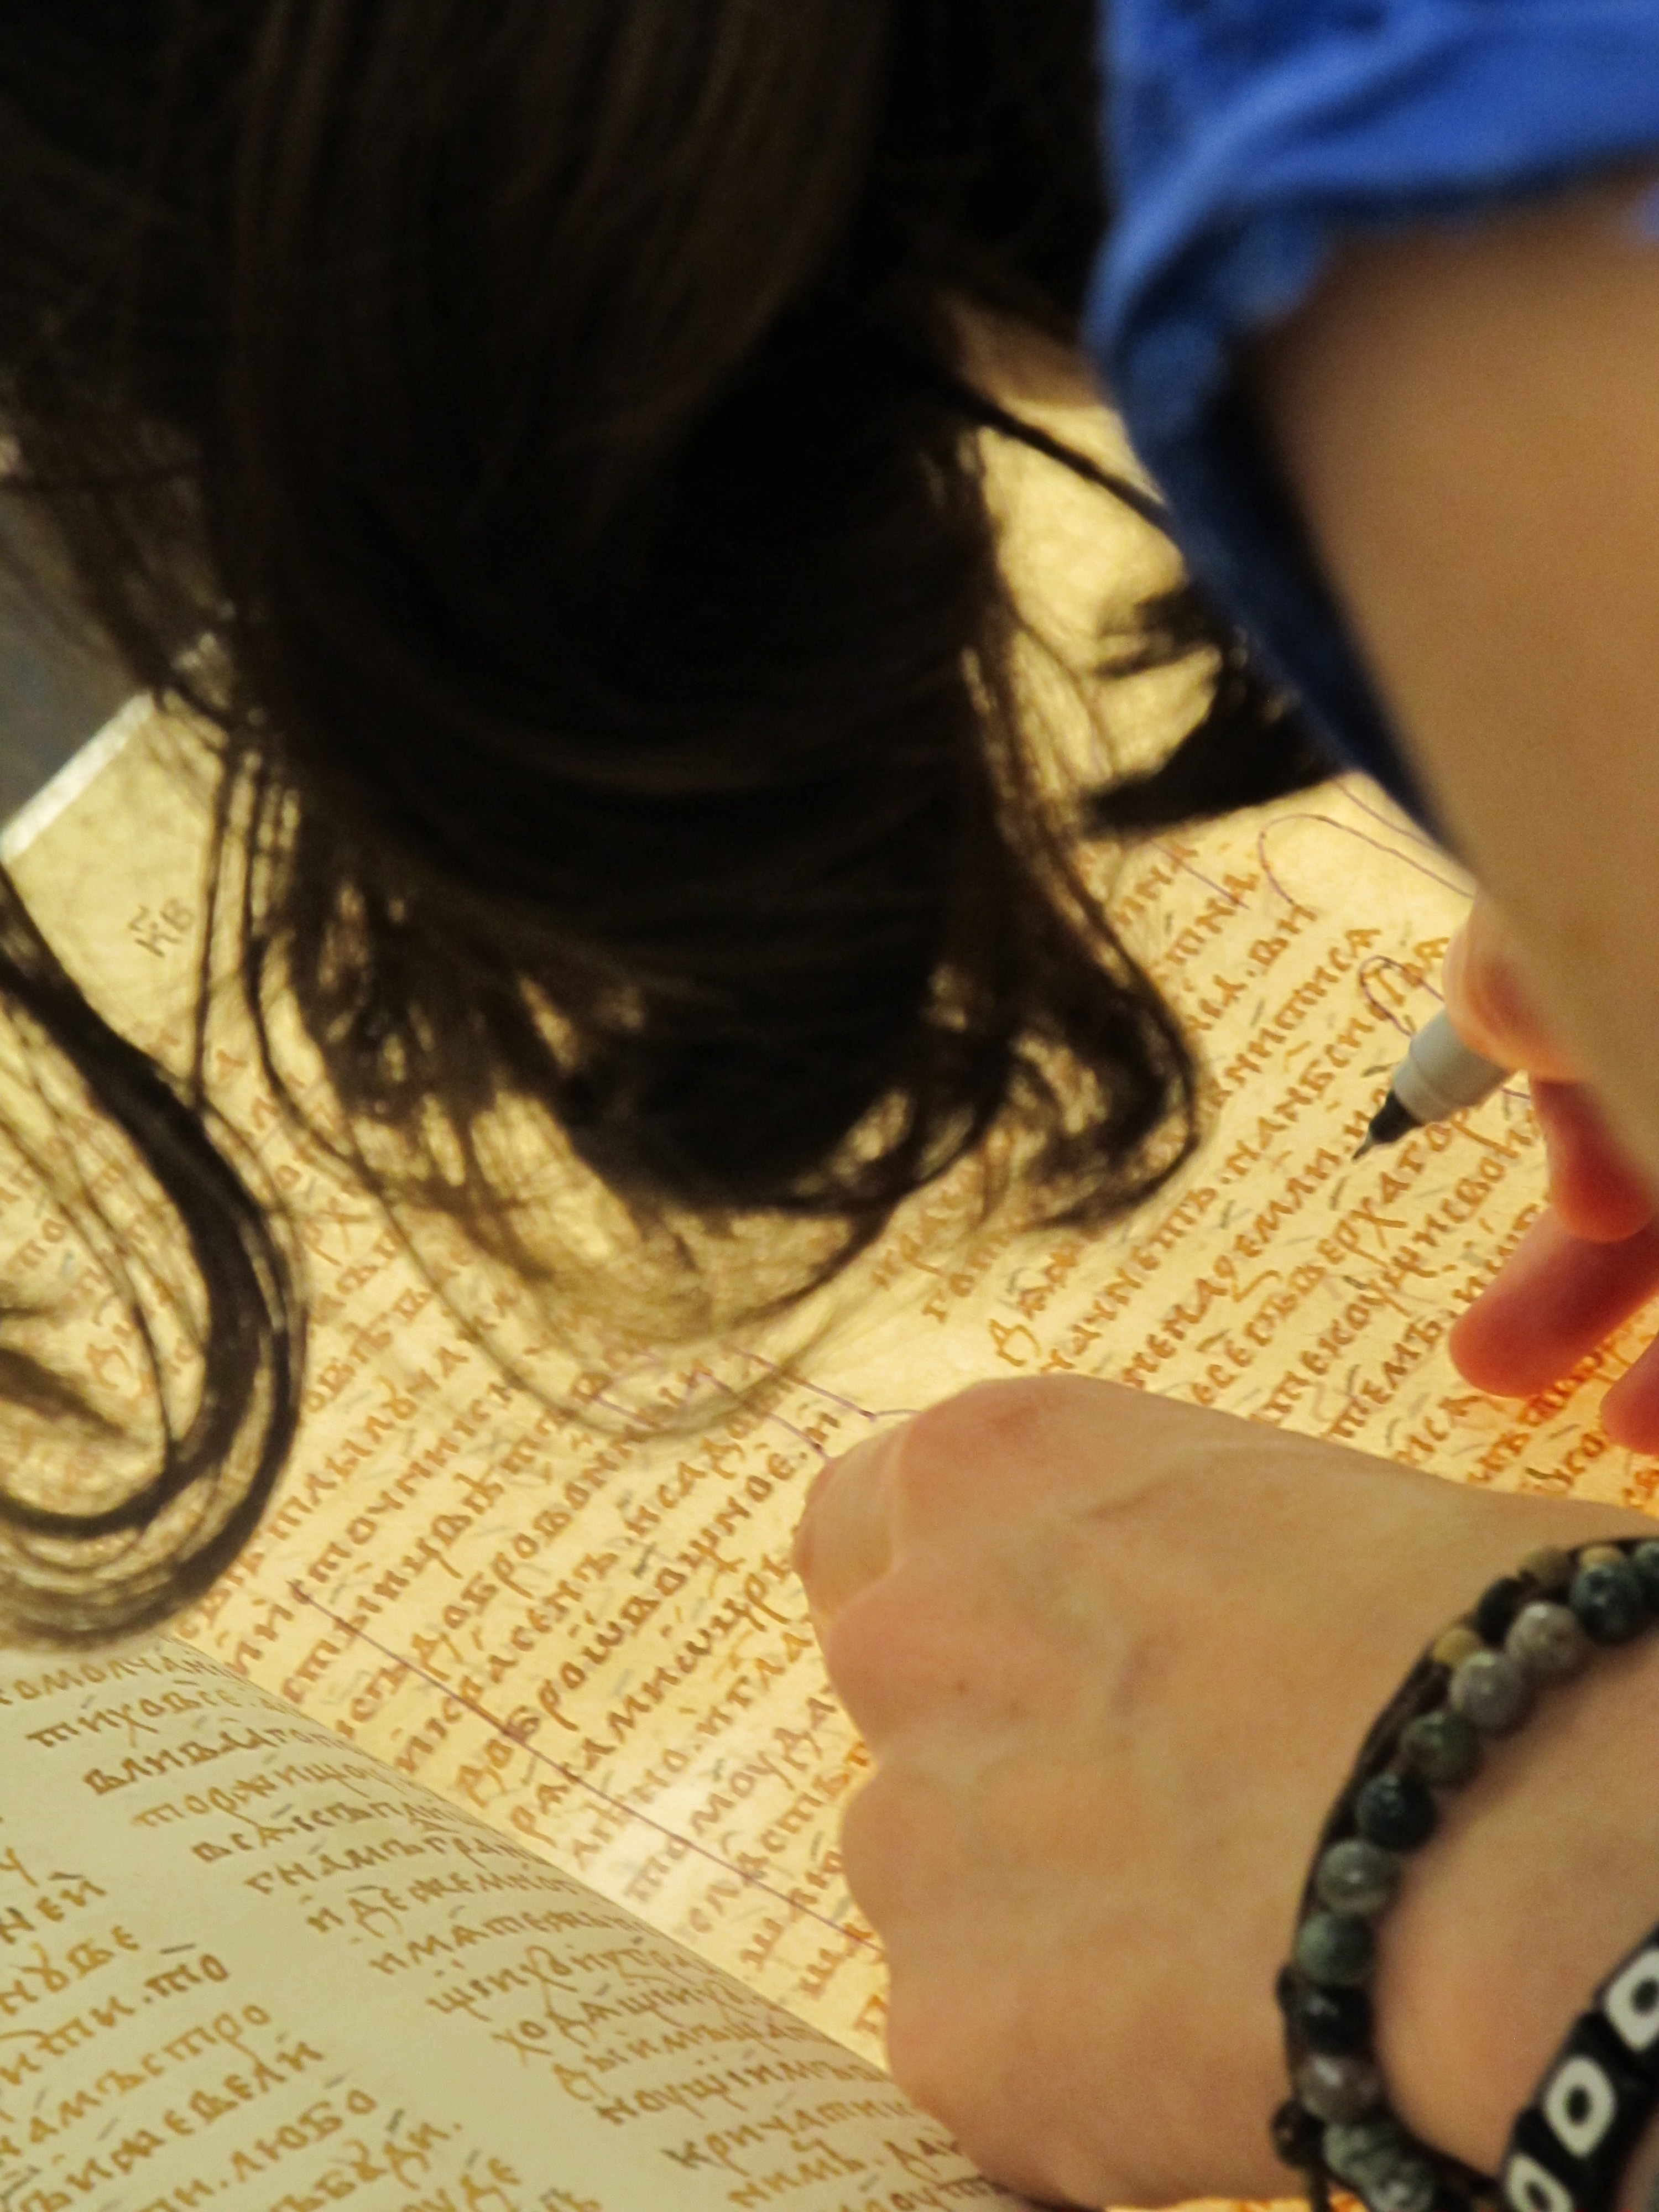 Participant uses a cold nose illuminator to examine the manuscript